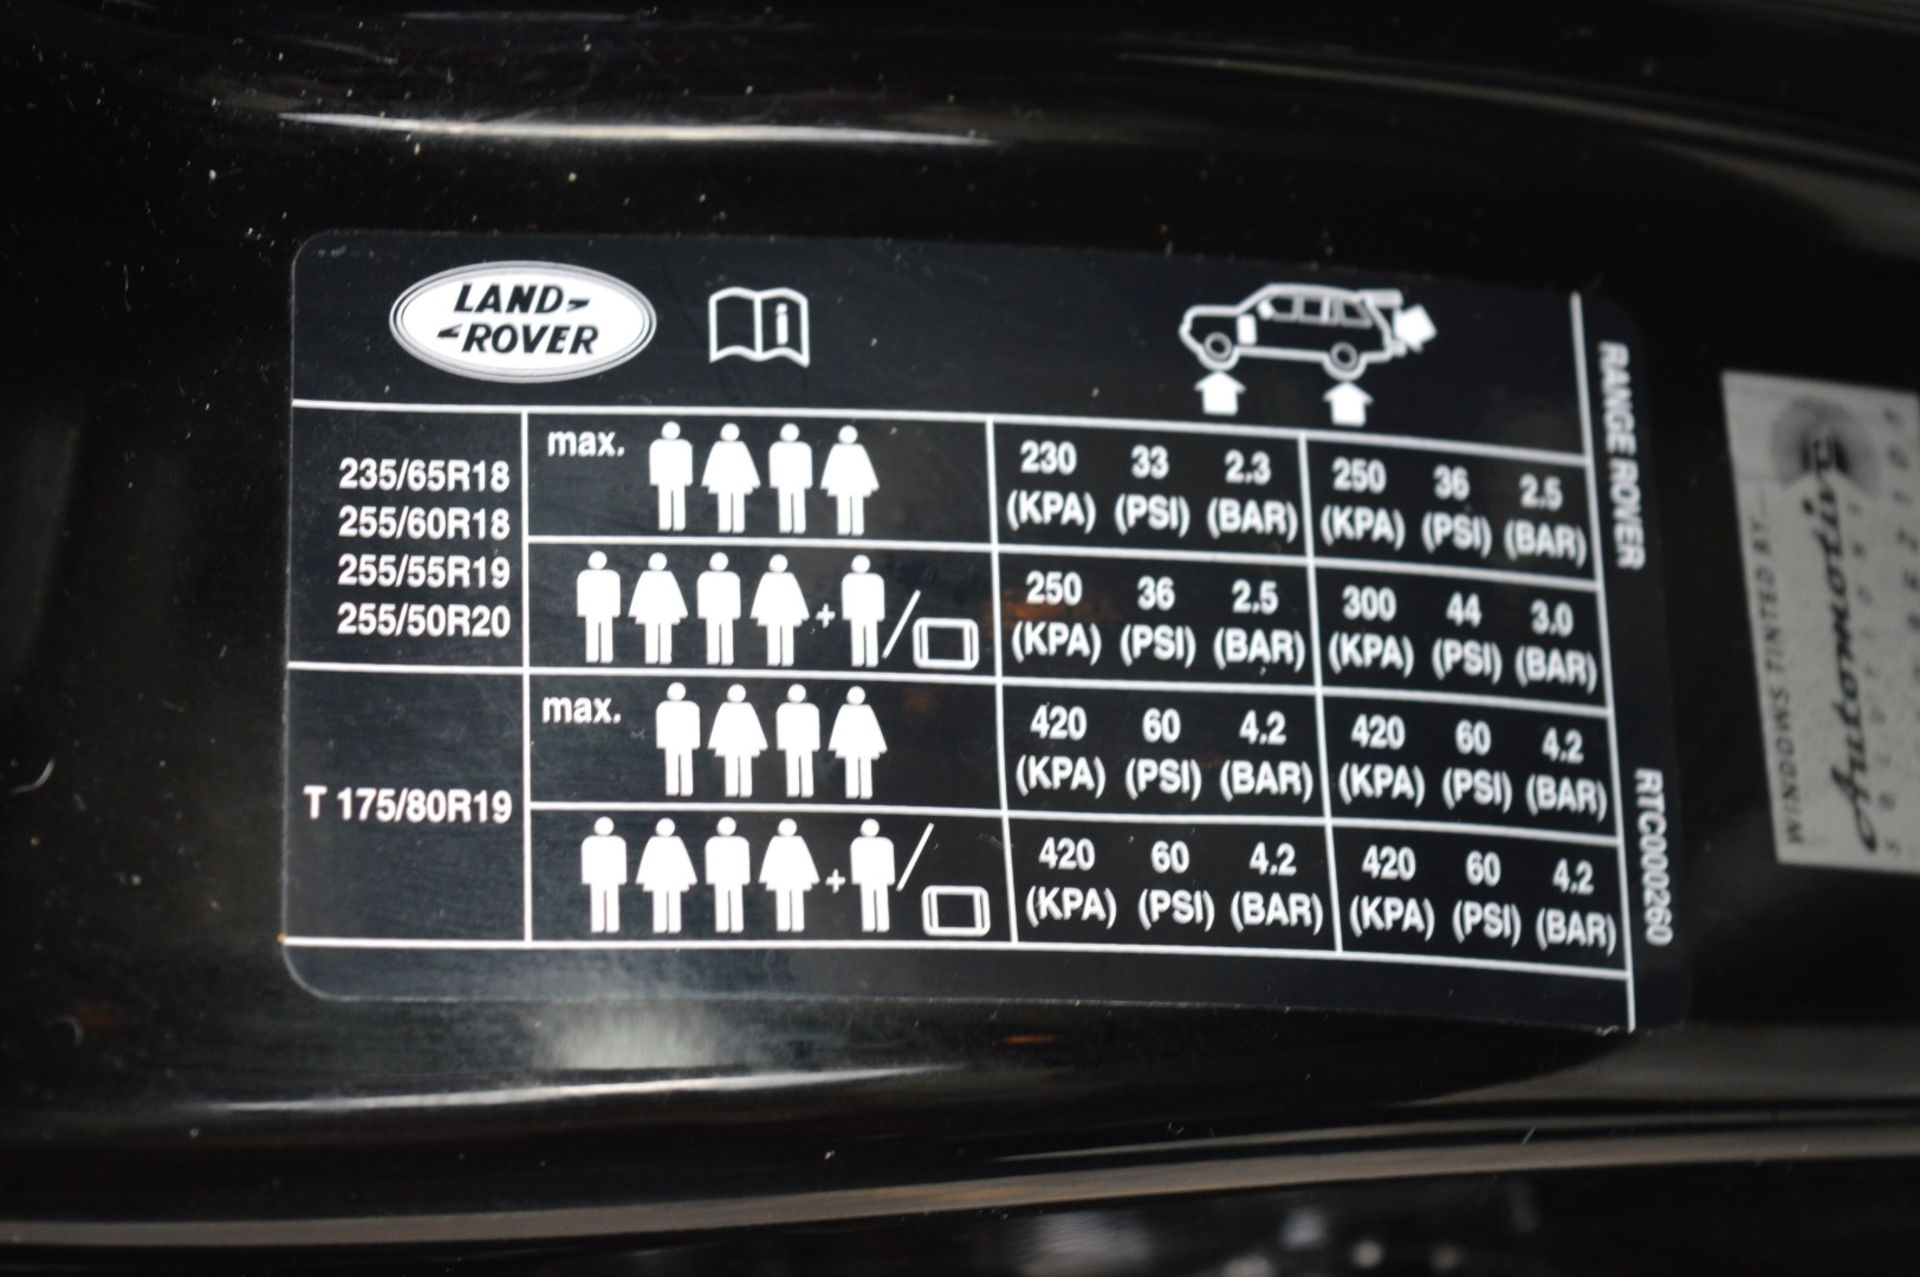 1 x Range Rover Vogue V8 4.4 Automatic - Black, Leather Interior, Petrol, Television, Premium - Image 18 of 63